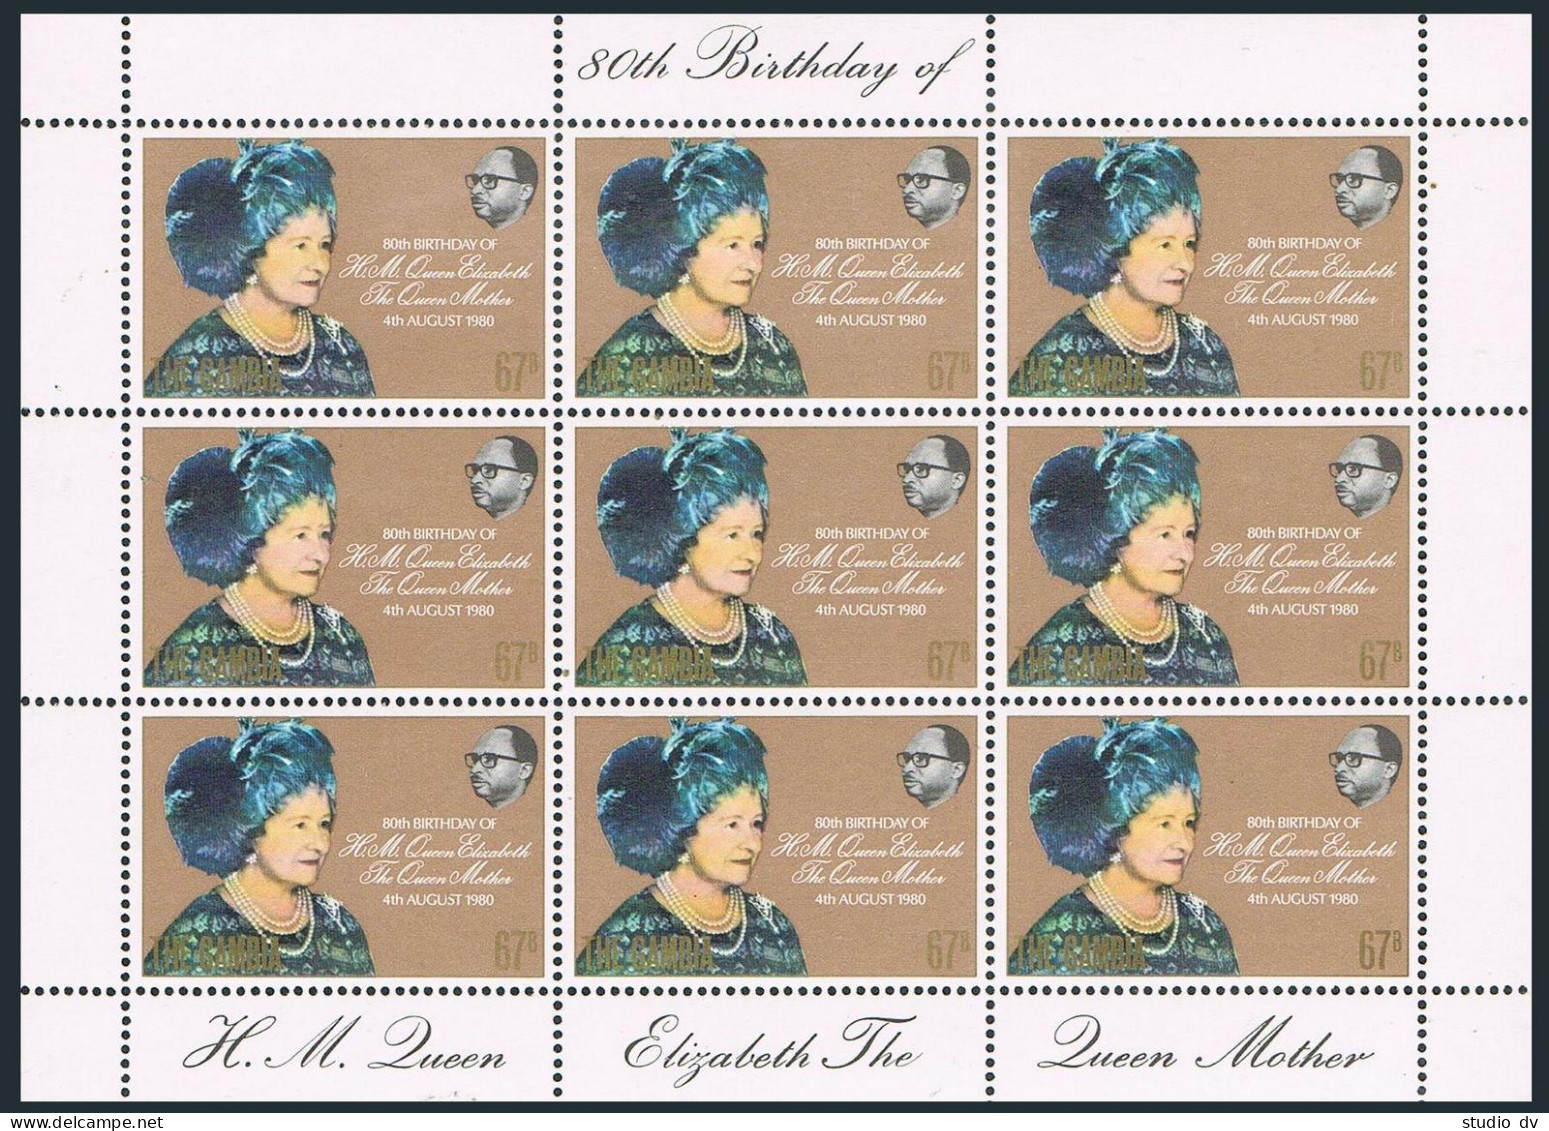 Gambia 412 Sheet, MNH. Mi 410 Klb. Queen Mother Elizabeth, 80 Birthday, 1980. - Gambia (1965-...)